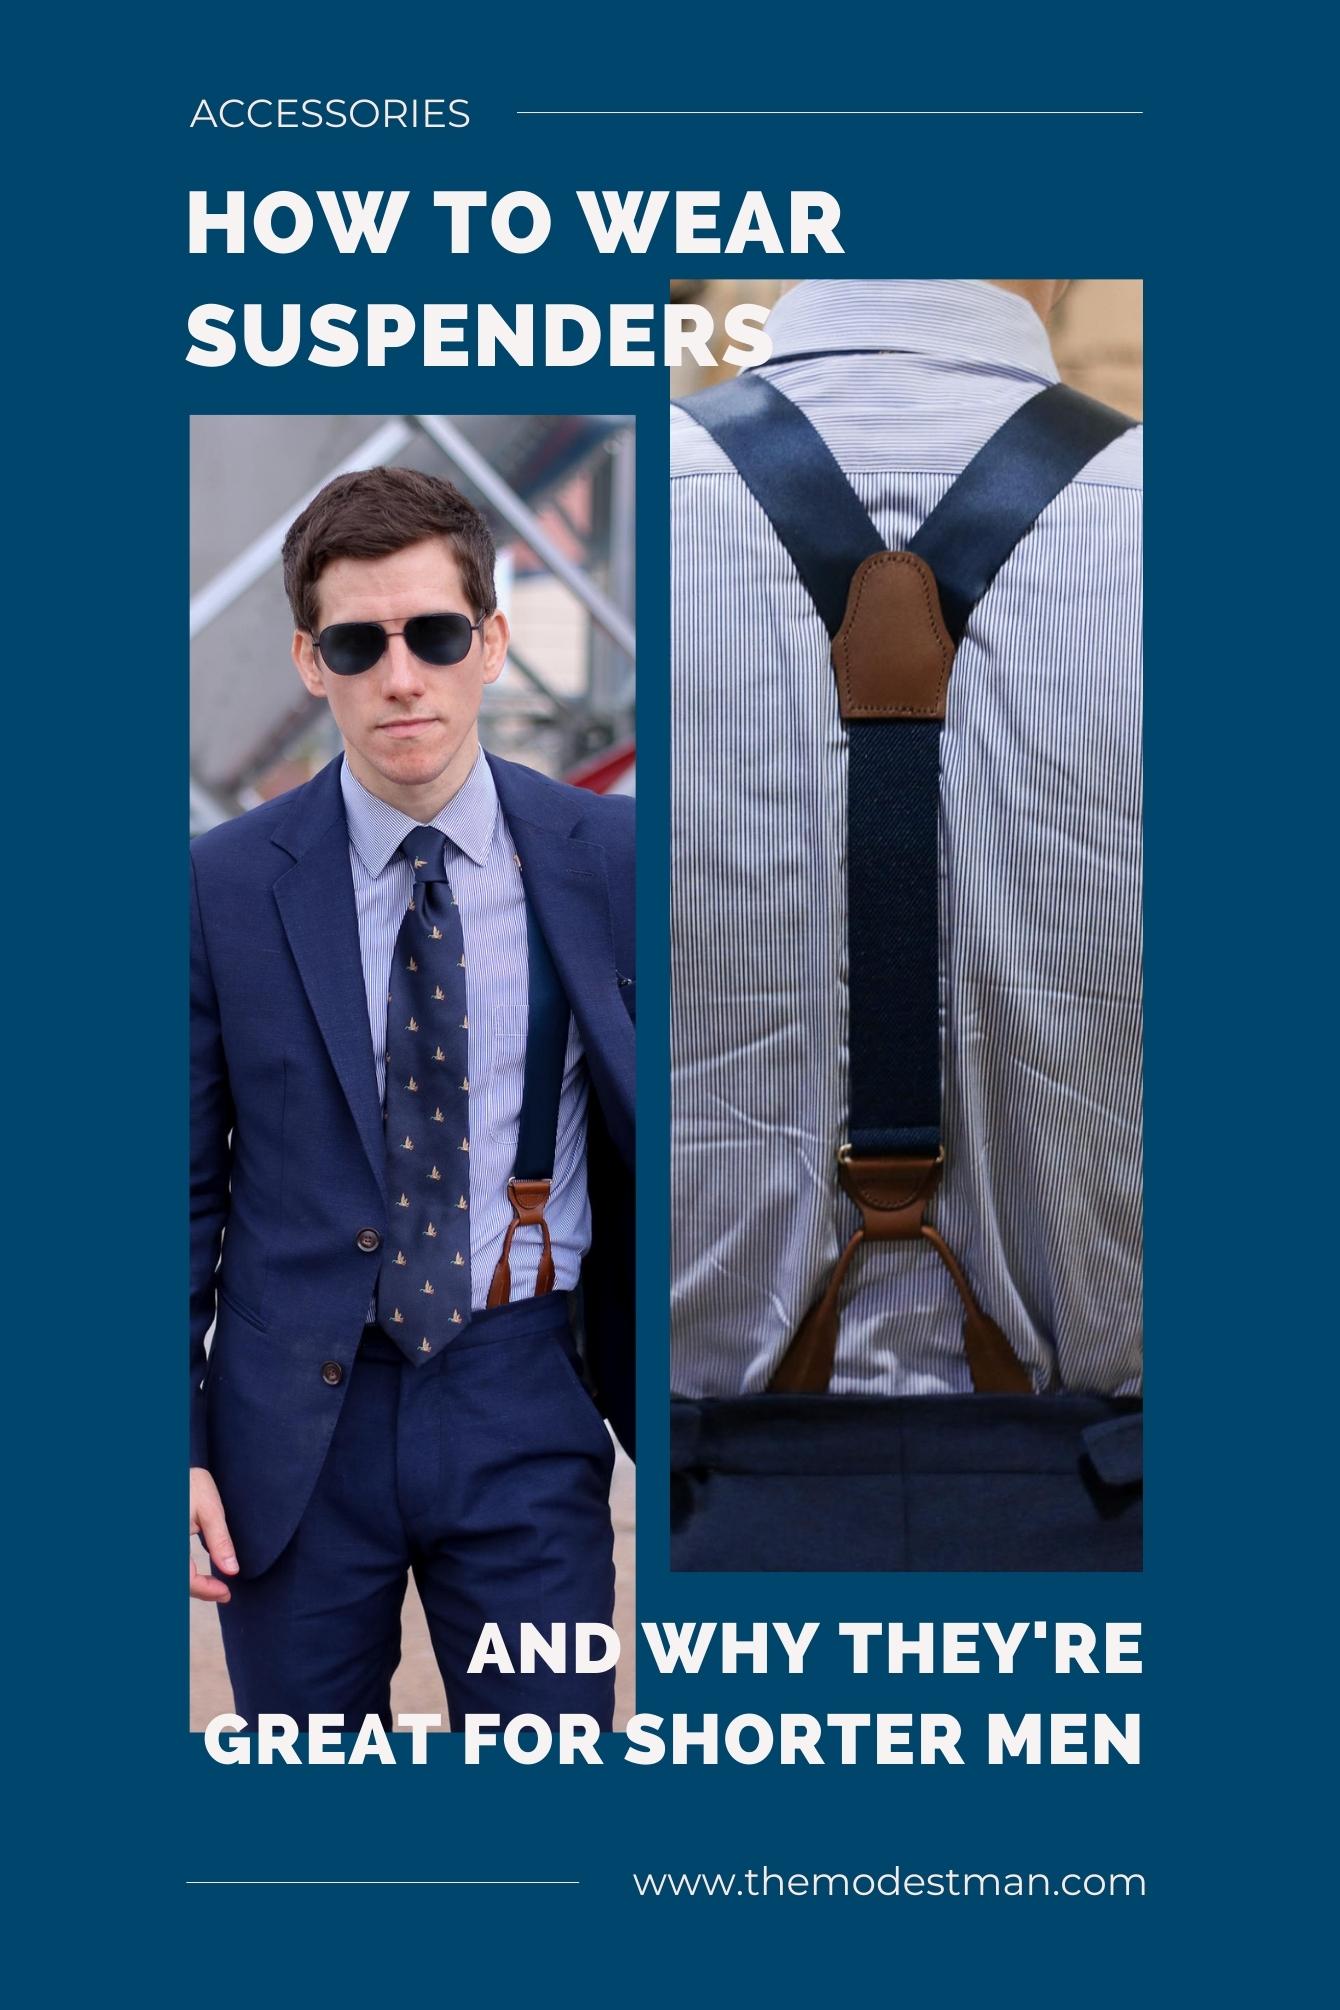 THE SUIT MEN | Mens fashion, Suspenders, Suspenders men